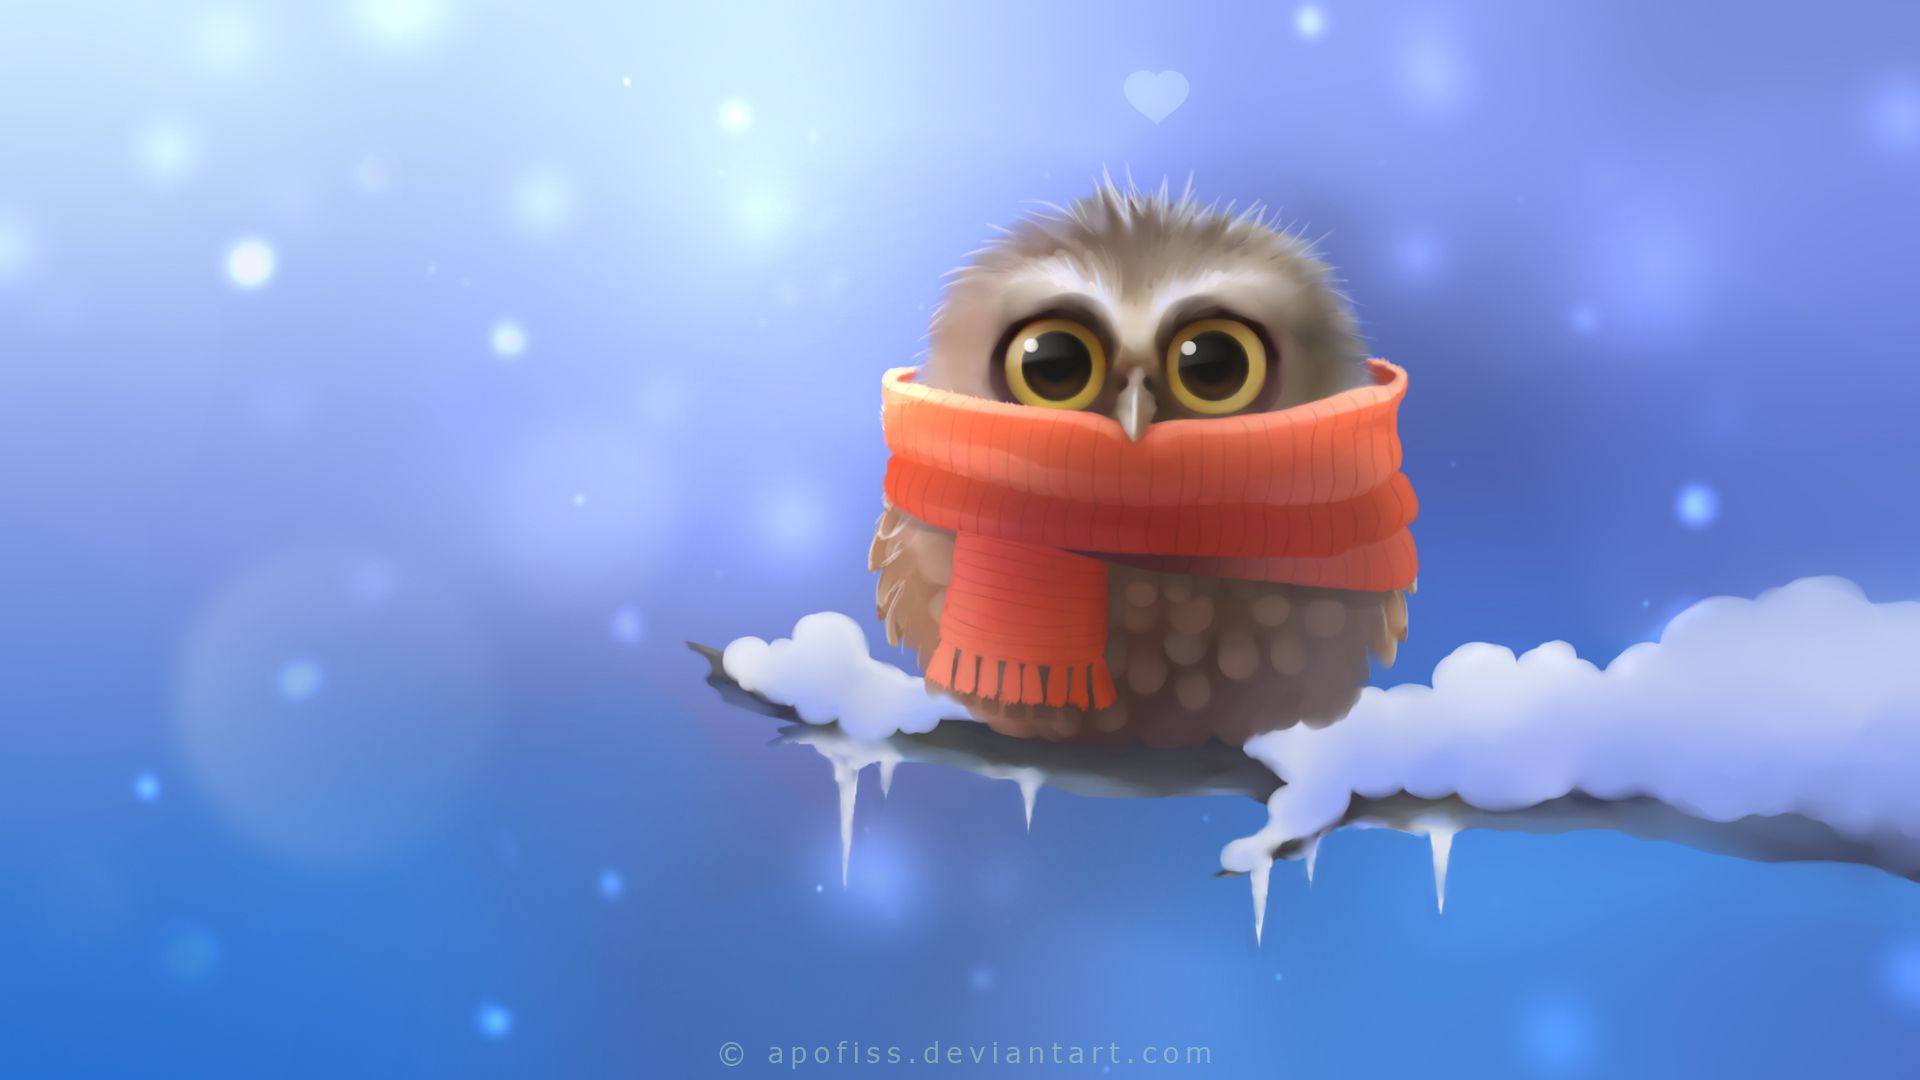 Cute Owl, HD Artist, 4k Wallpaper, Image, Background, Photo